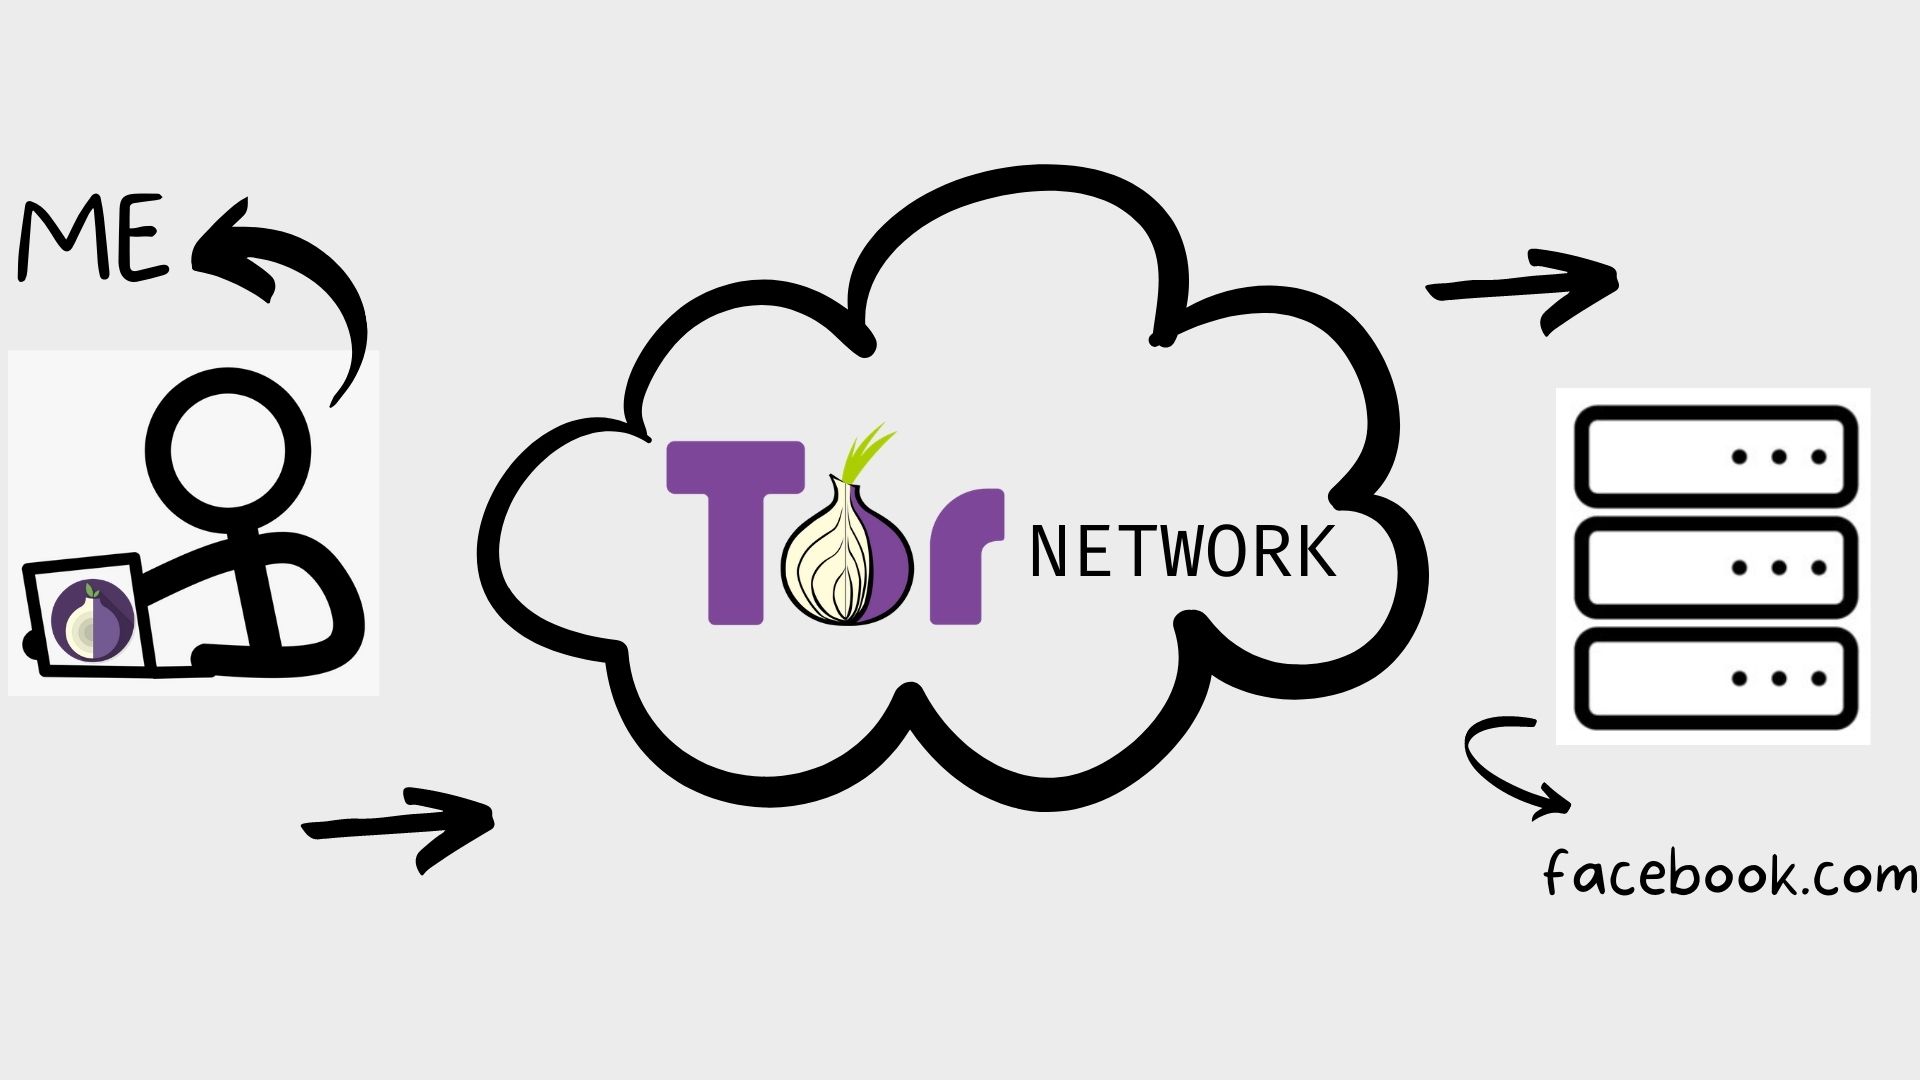 Using tor network